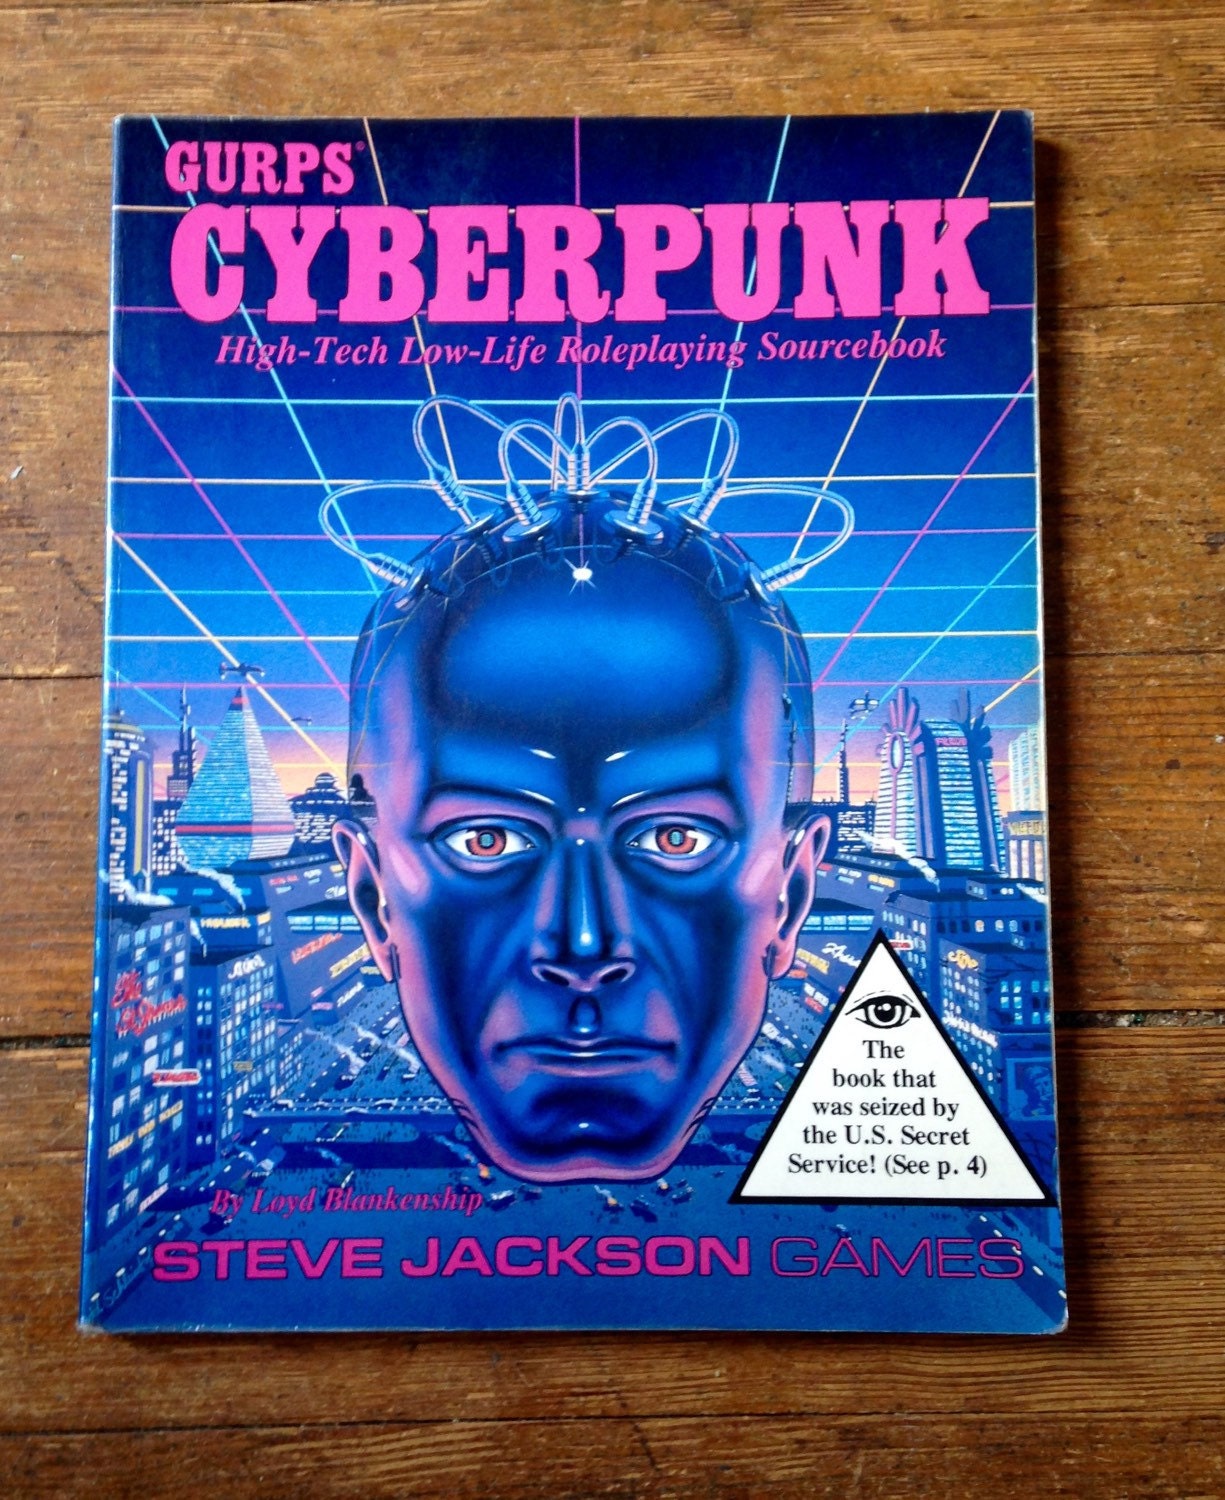 Gurps cyberpunk книга фото 2